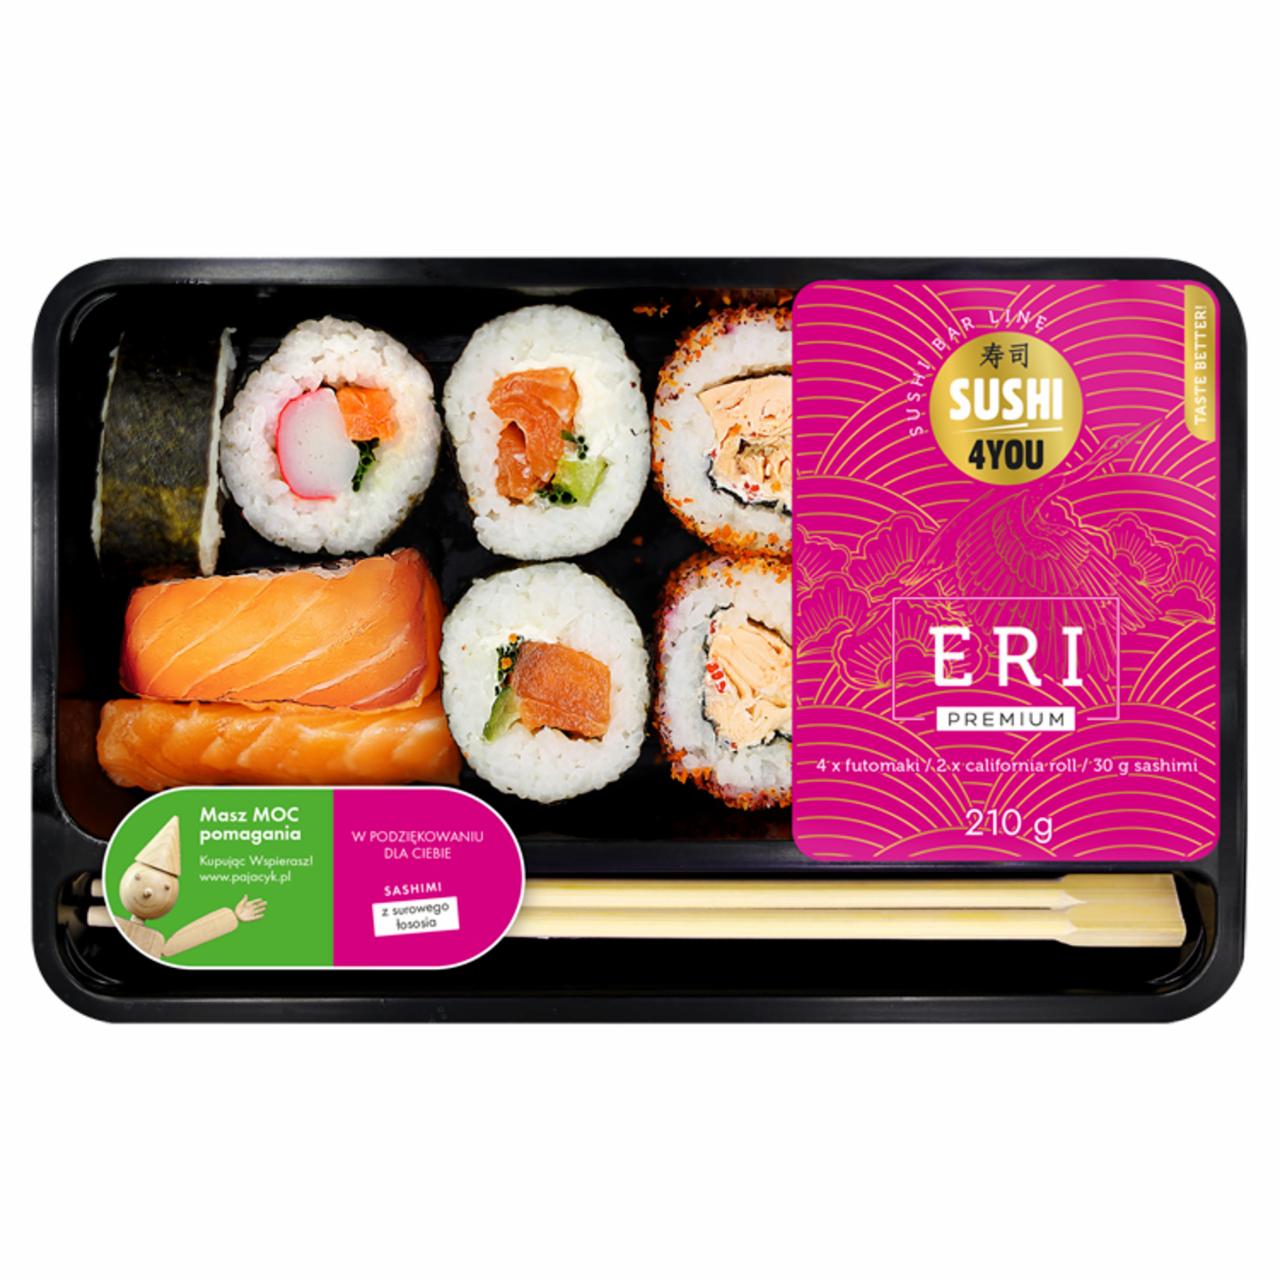 Photo - Sushi4You Premium Eri Sushi 210 g